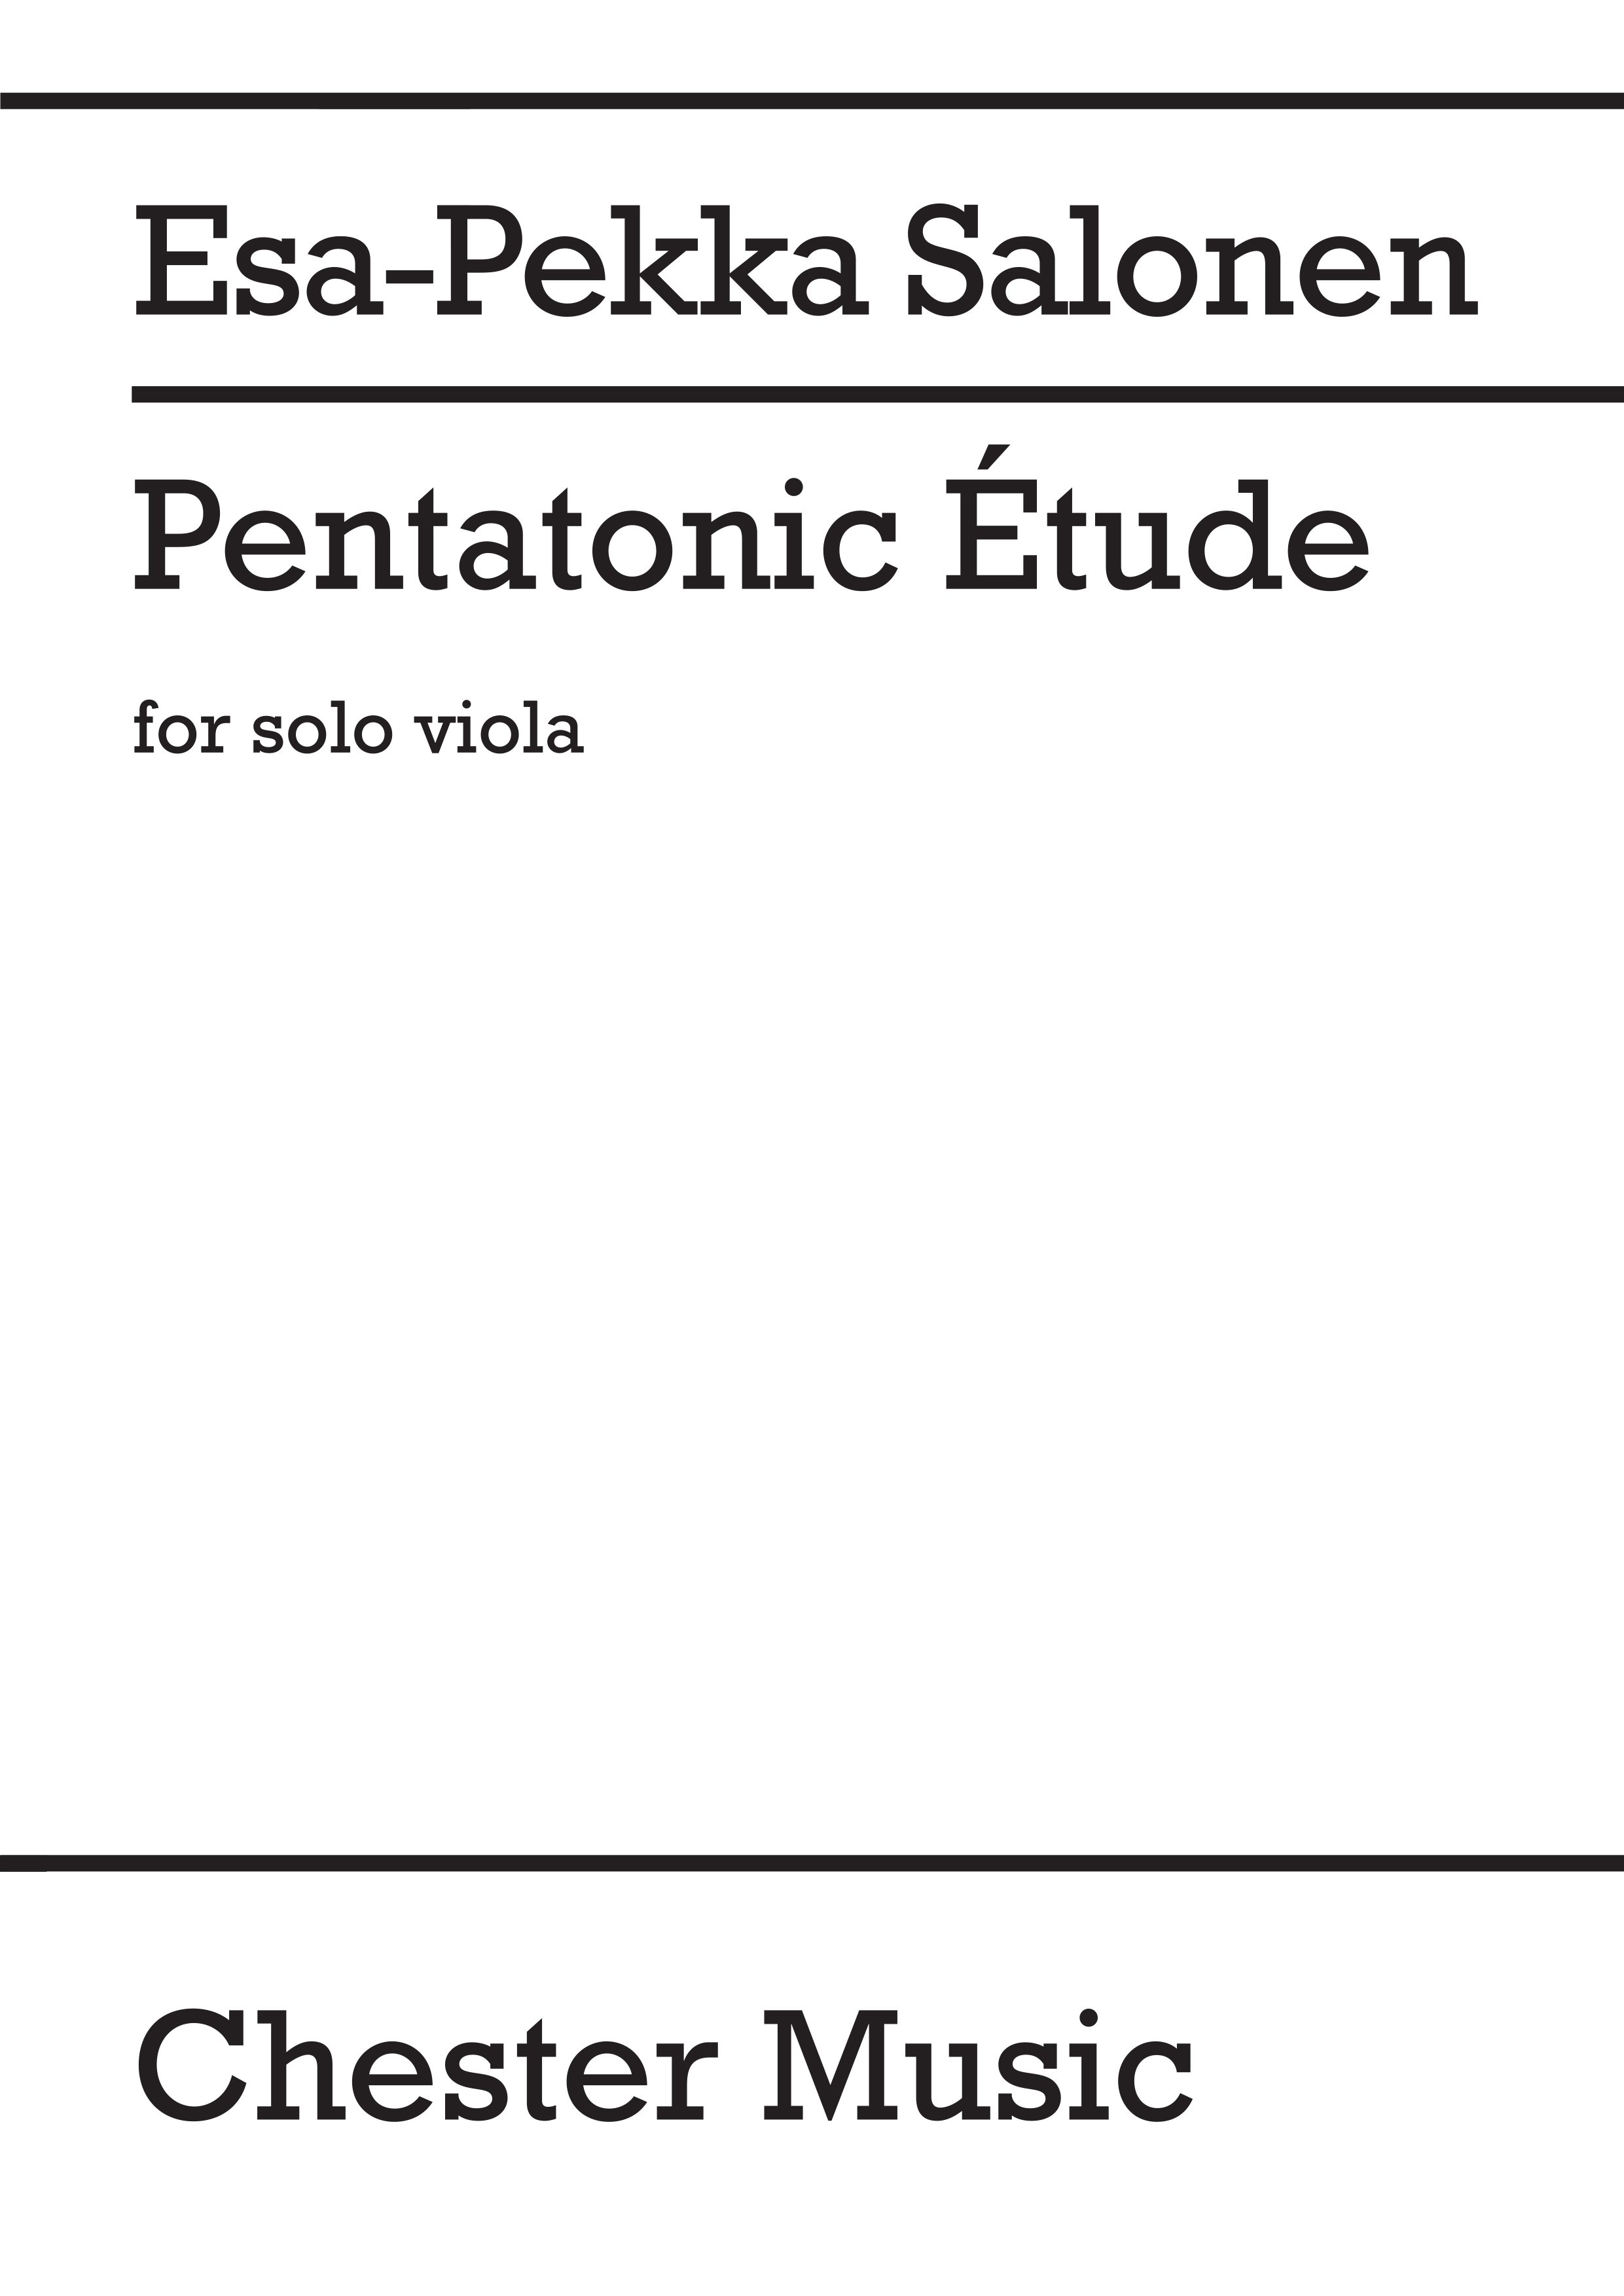 Pentatonic Etude For Solo Viola (SALONEN ESA-PEKKA)